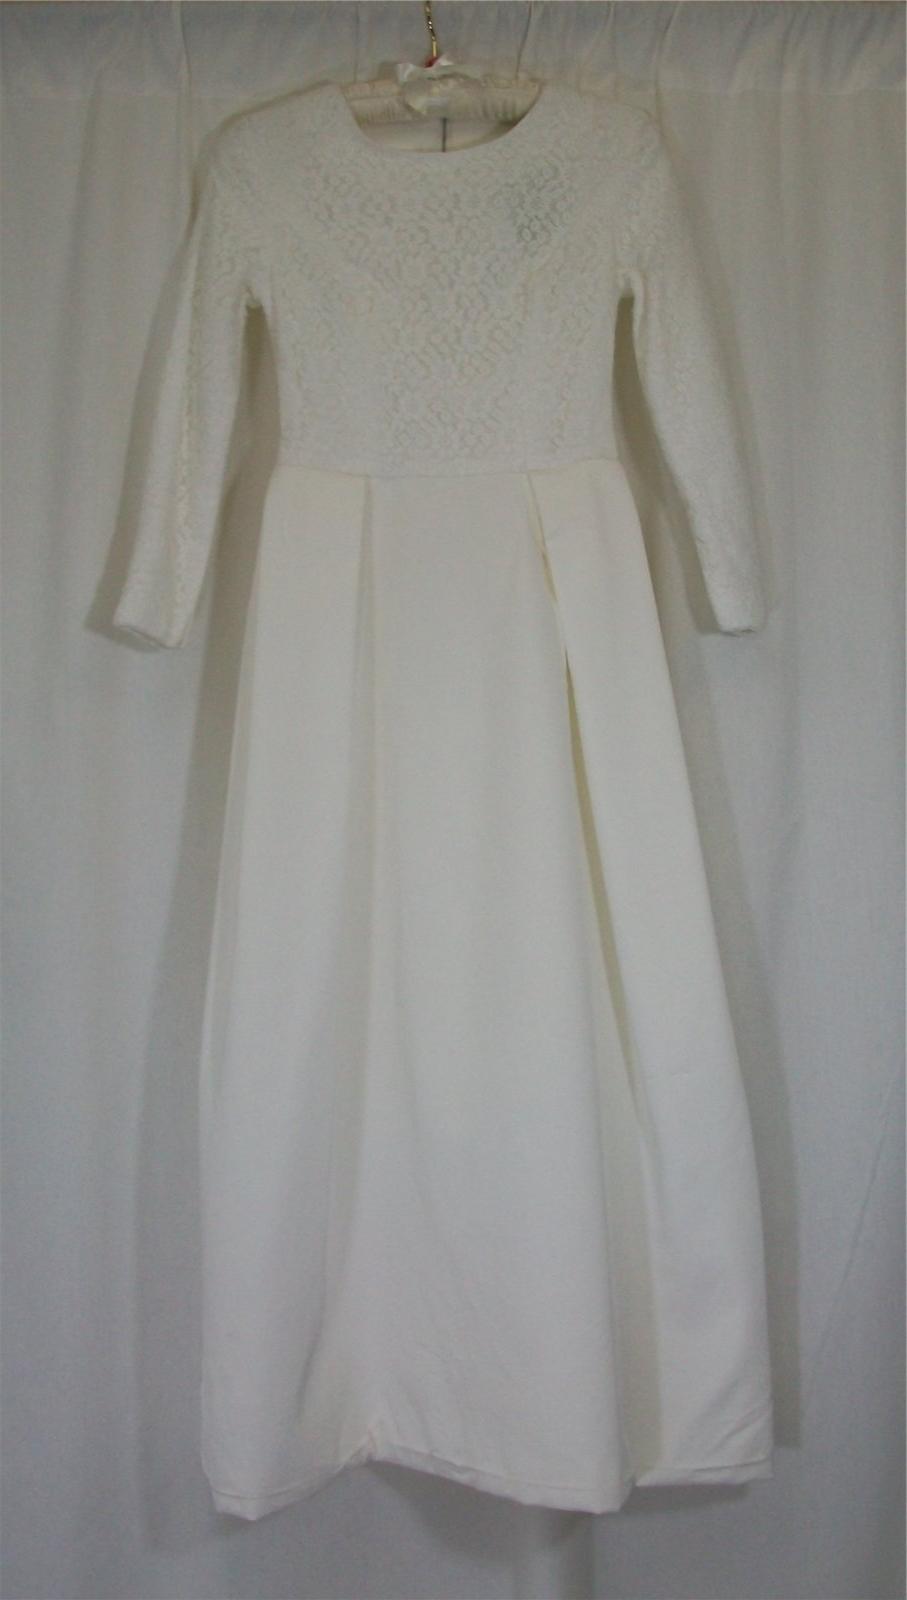 Handmade,size small.bust 29 waist 24 white, full length wedding dress.